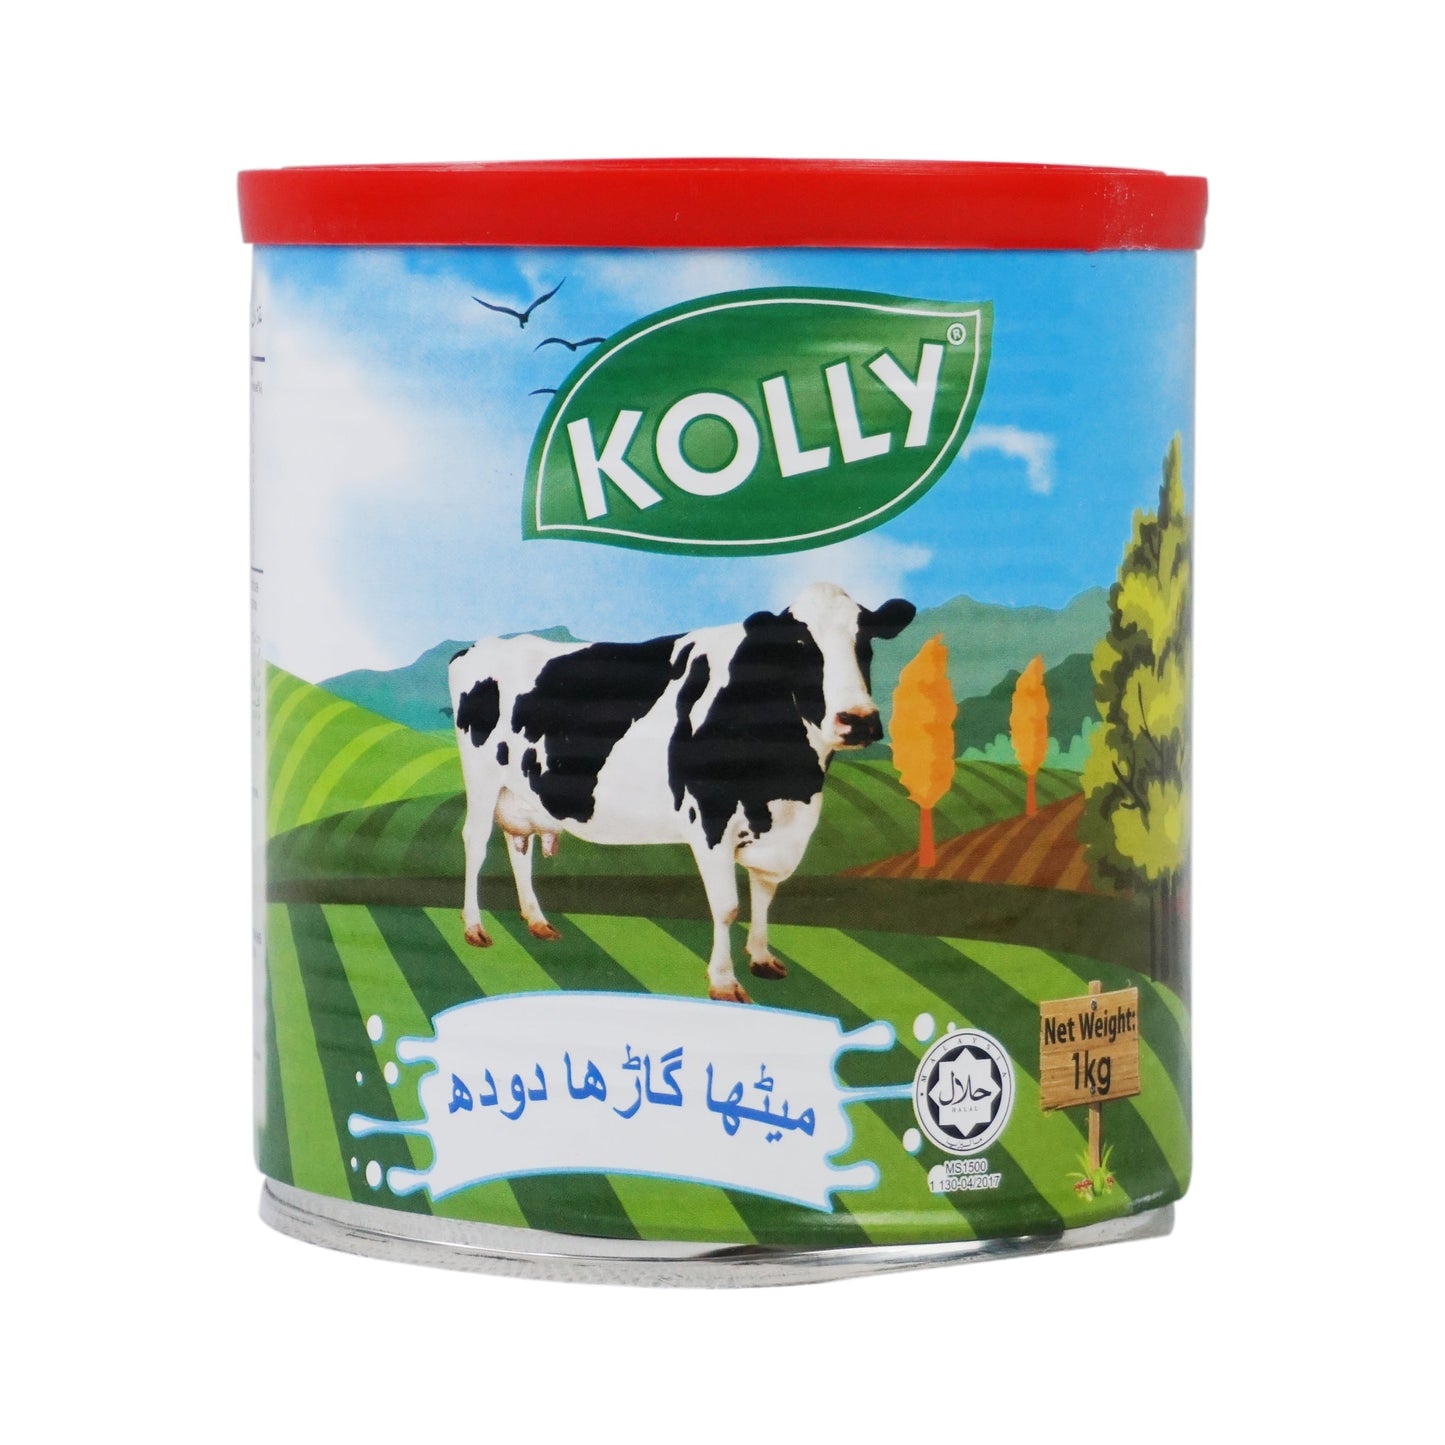 Kolly Sweetened Condensed Filled Milk 1KG